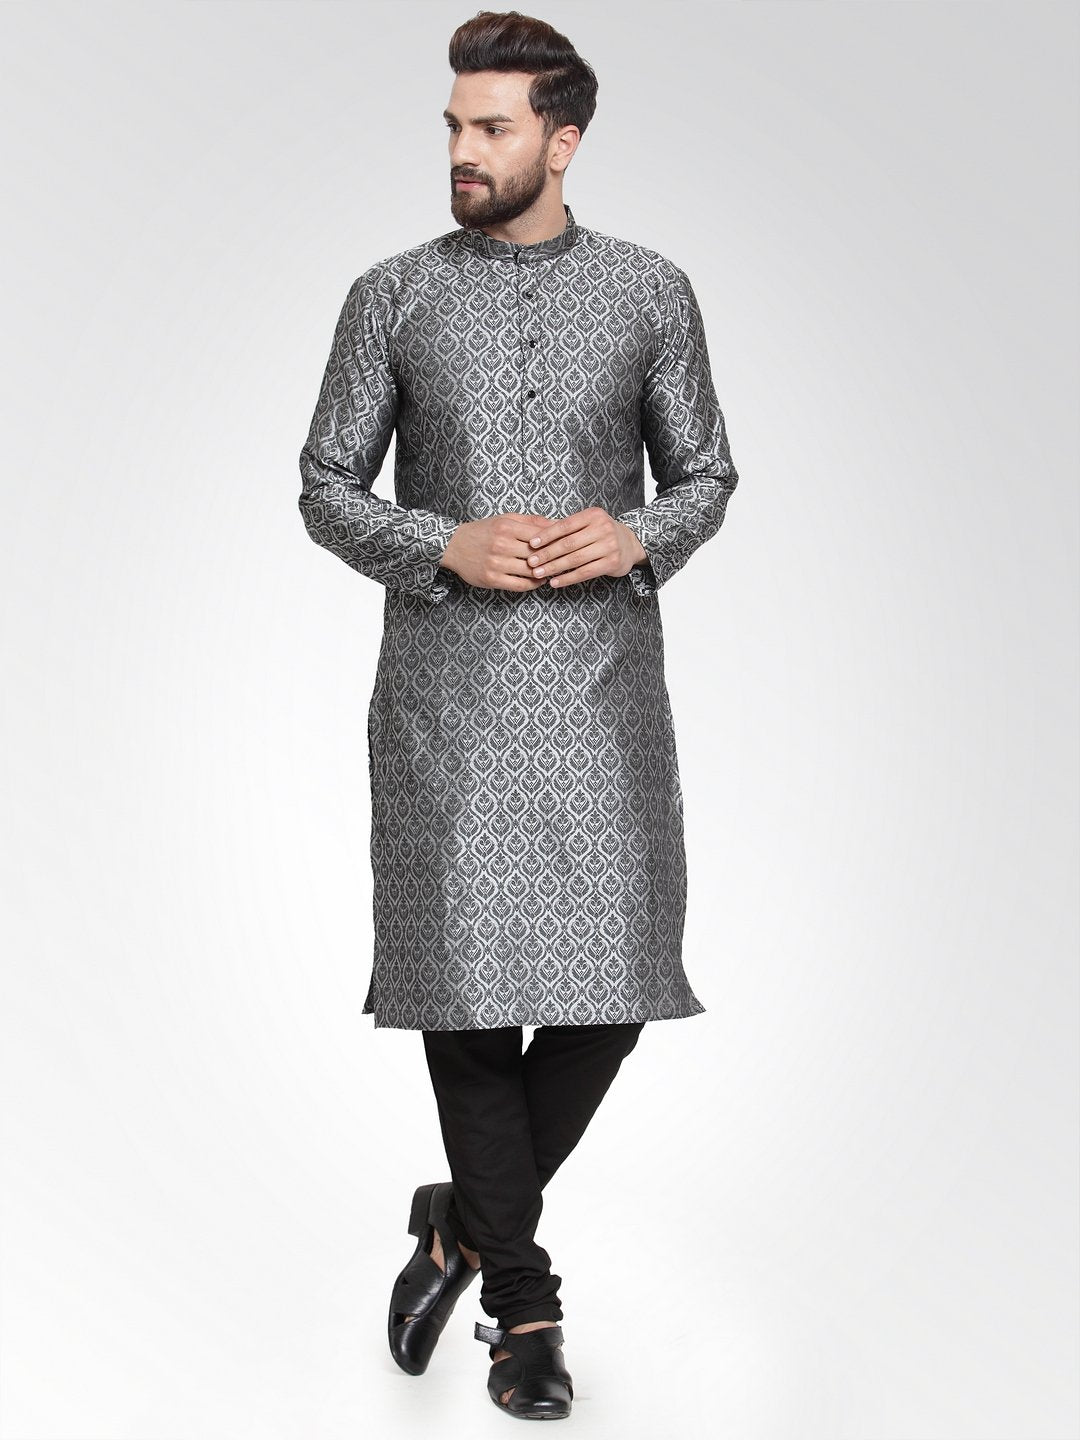 Men's Silver-Colored & Black Self Design Kurta with Churidar ( JOKP 584 Silver ) - Virat Fashions